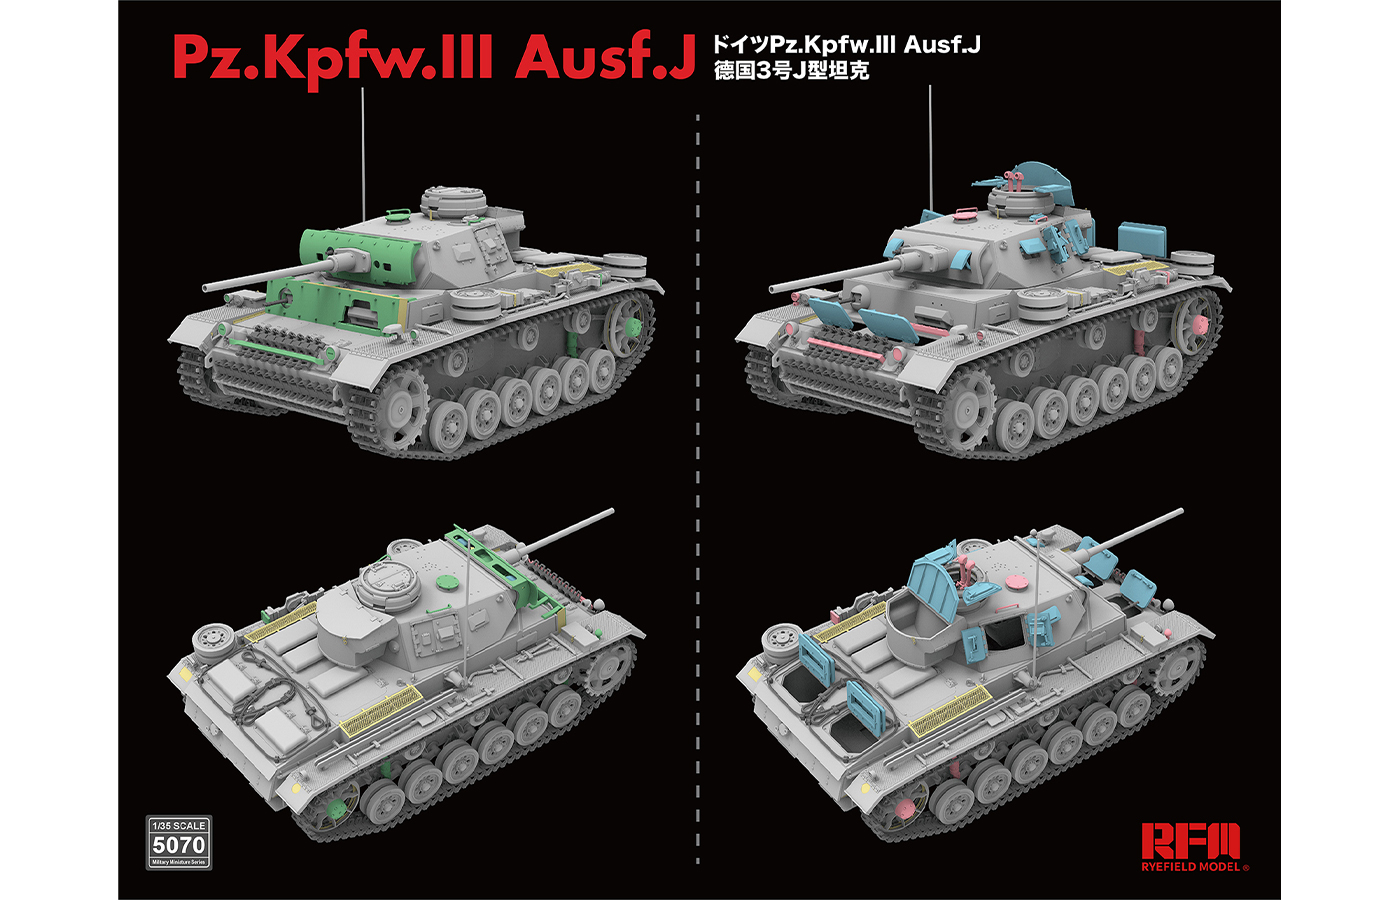 Pz.Kpfw.III Ausf.J